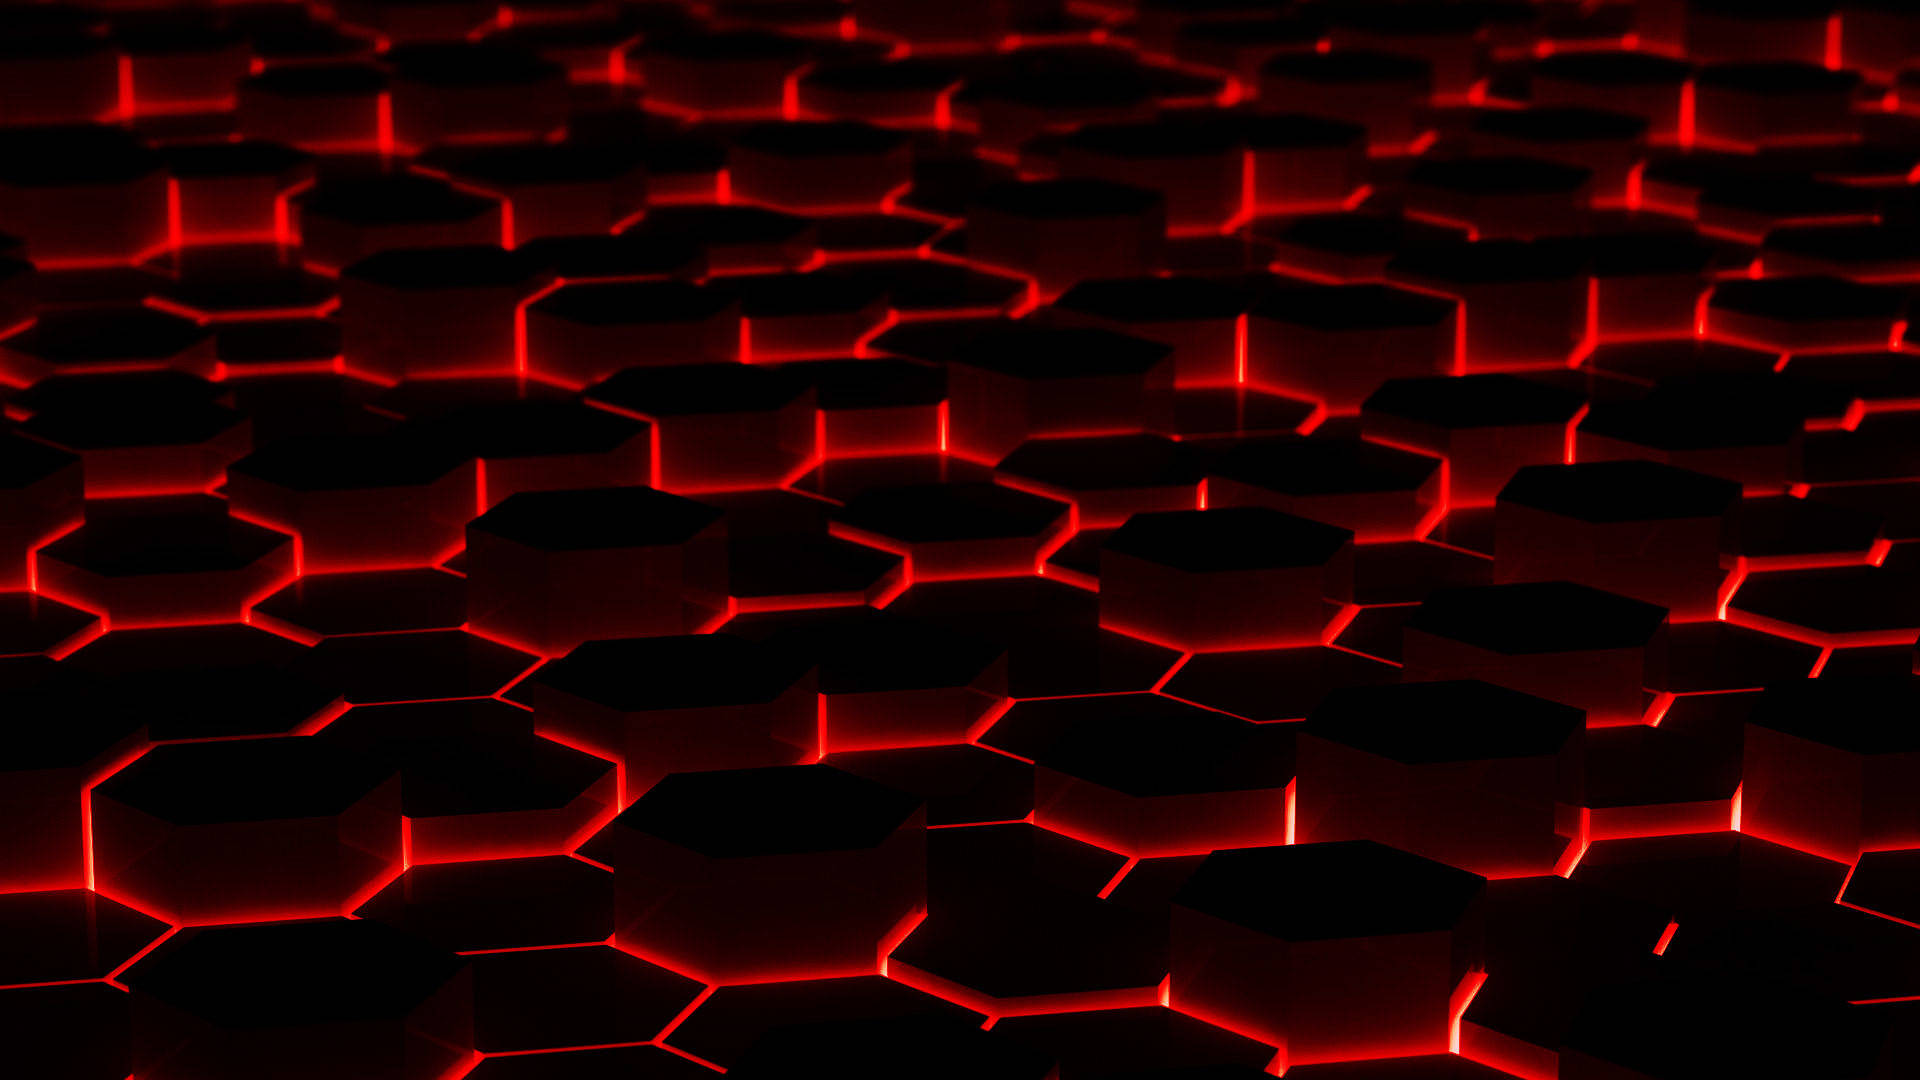 Red Backlight And Hexagons In Black Desktop